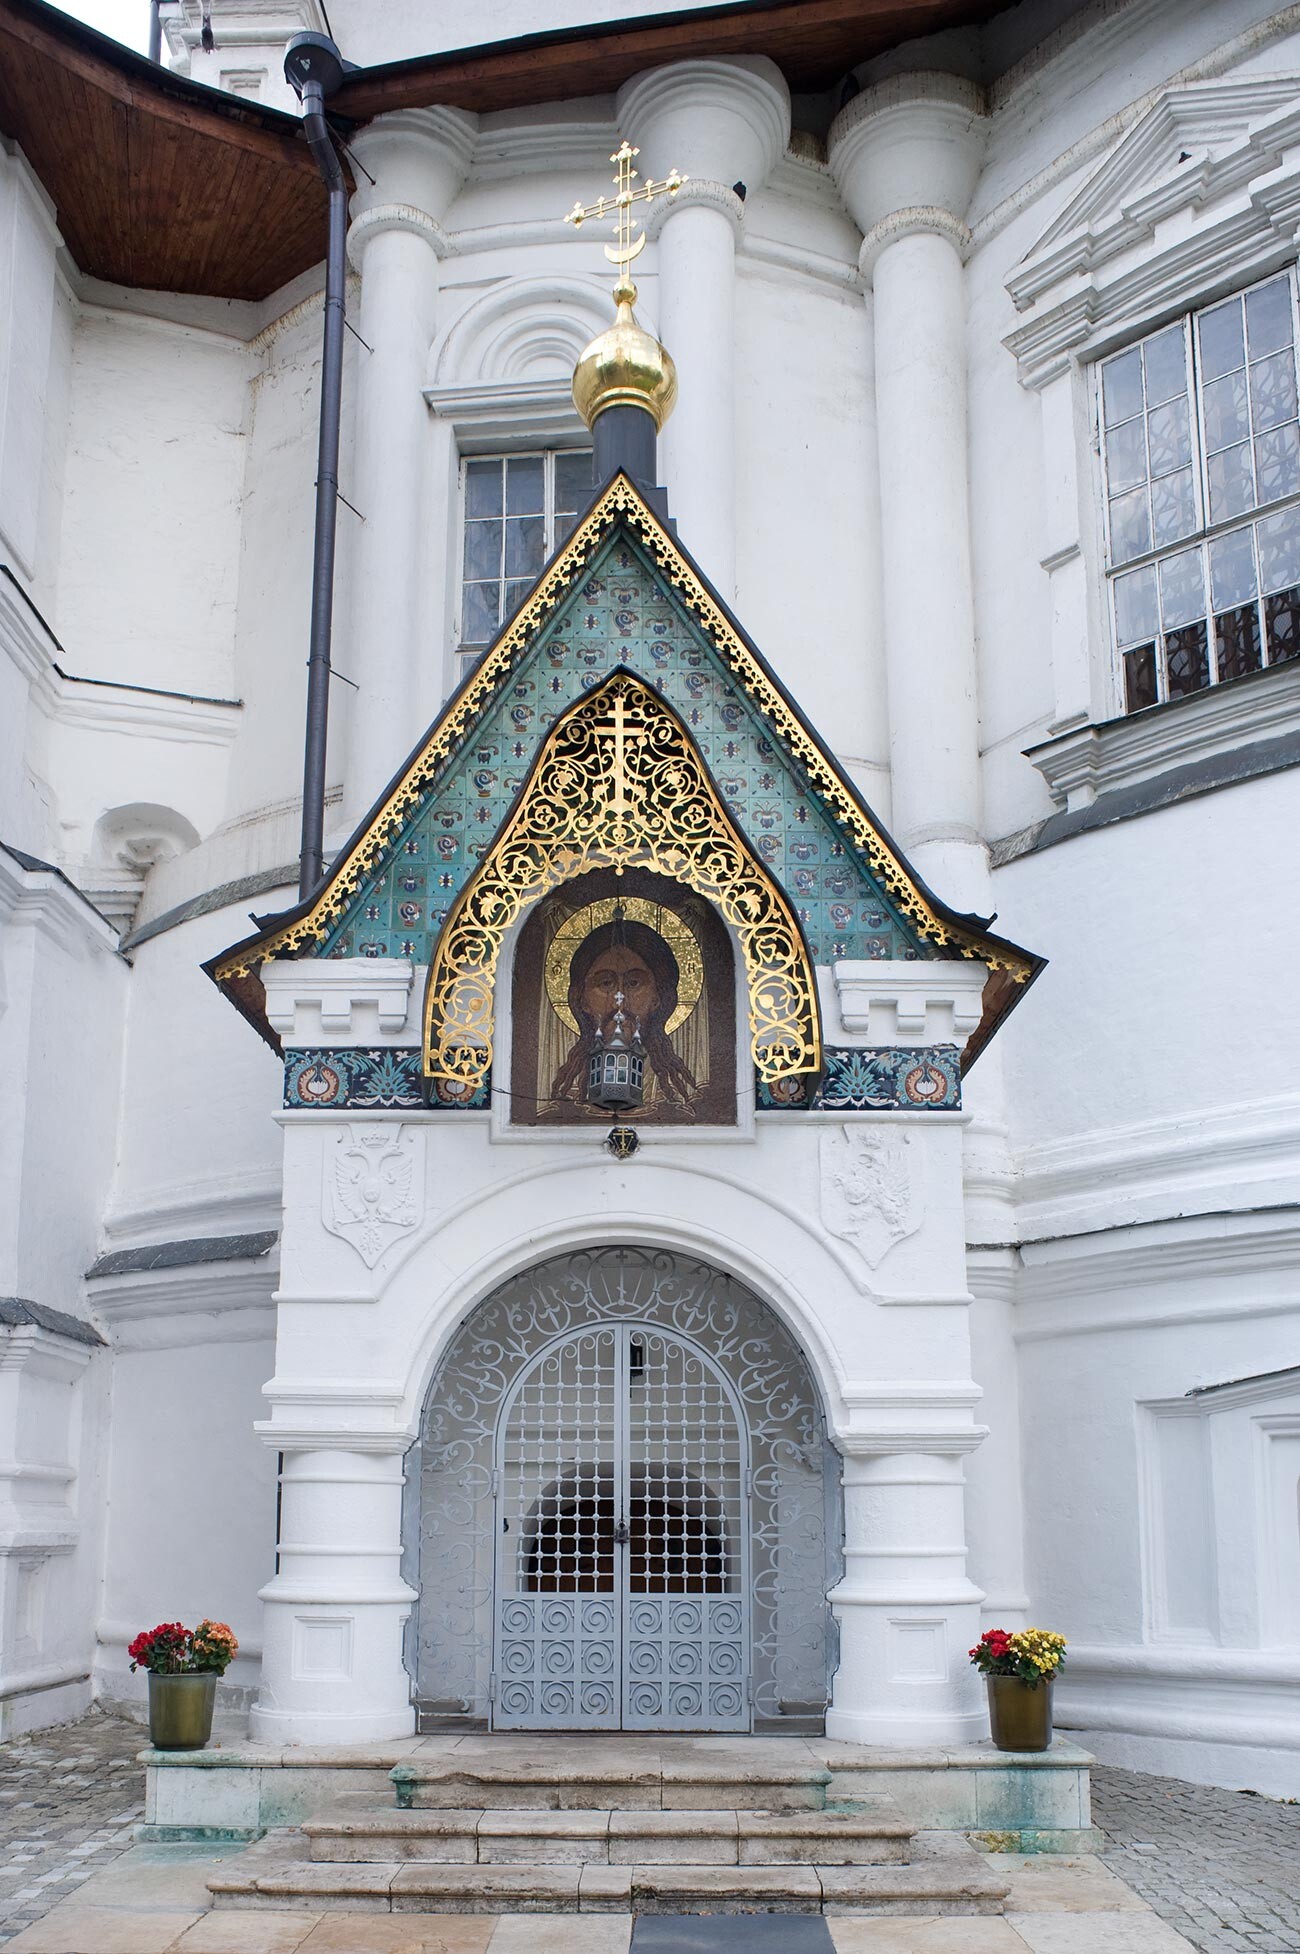 Monastère Novospasski, cathédrale de la Transfiguration. Façade orientale avec entrée originale de la crypte funéraire des Romanov. 18 août 2013